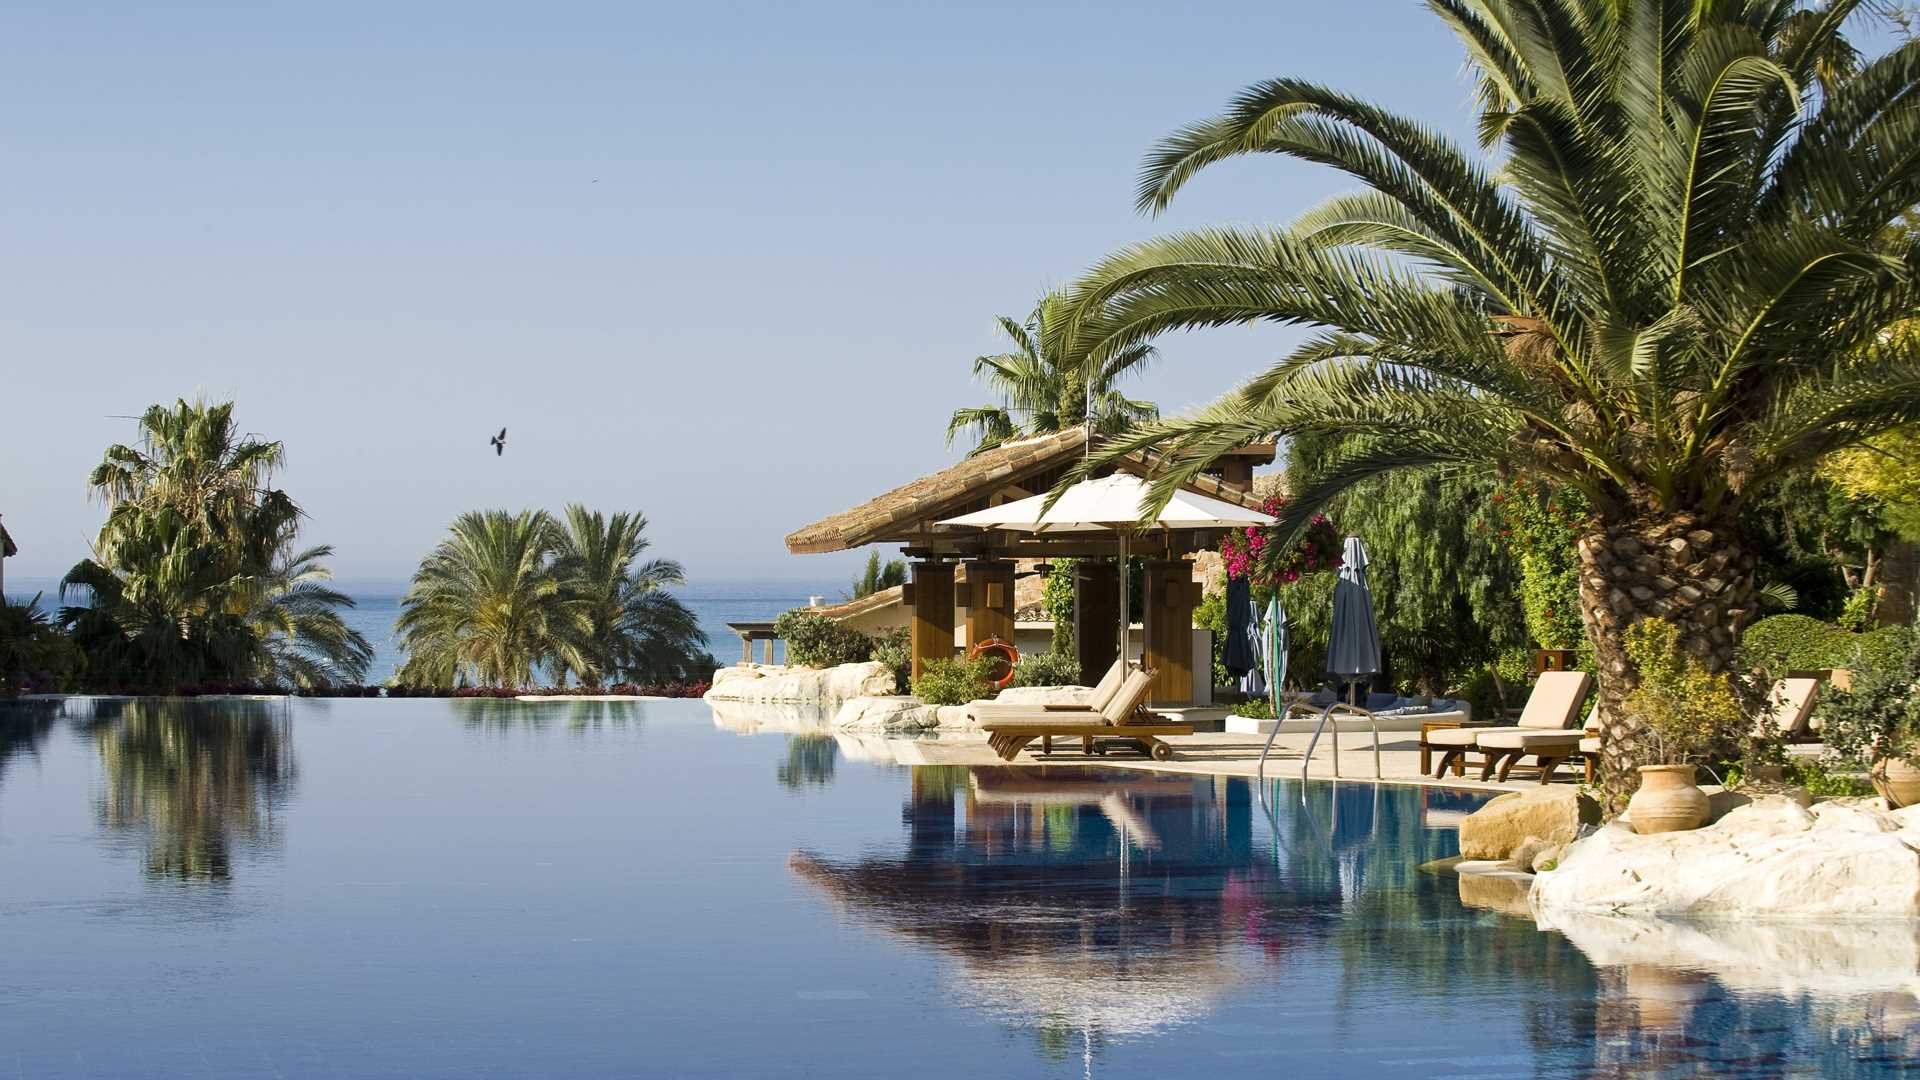 Columbia Beach Resort Relaxing Holidays To Cyprus Limassol Cyprus